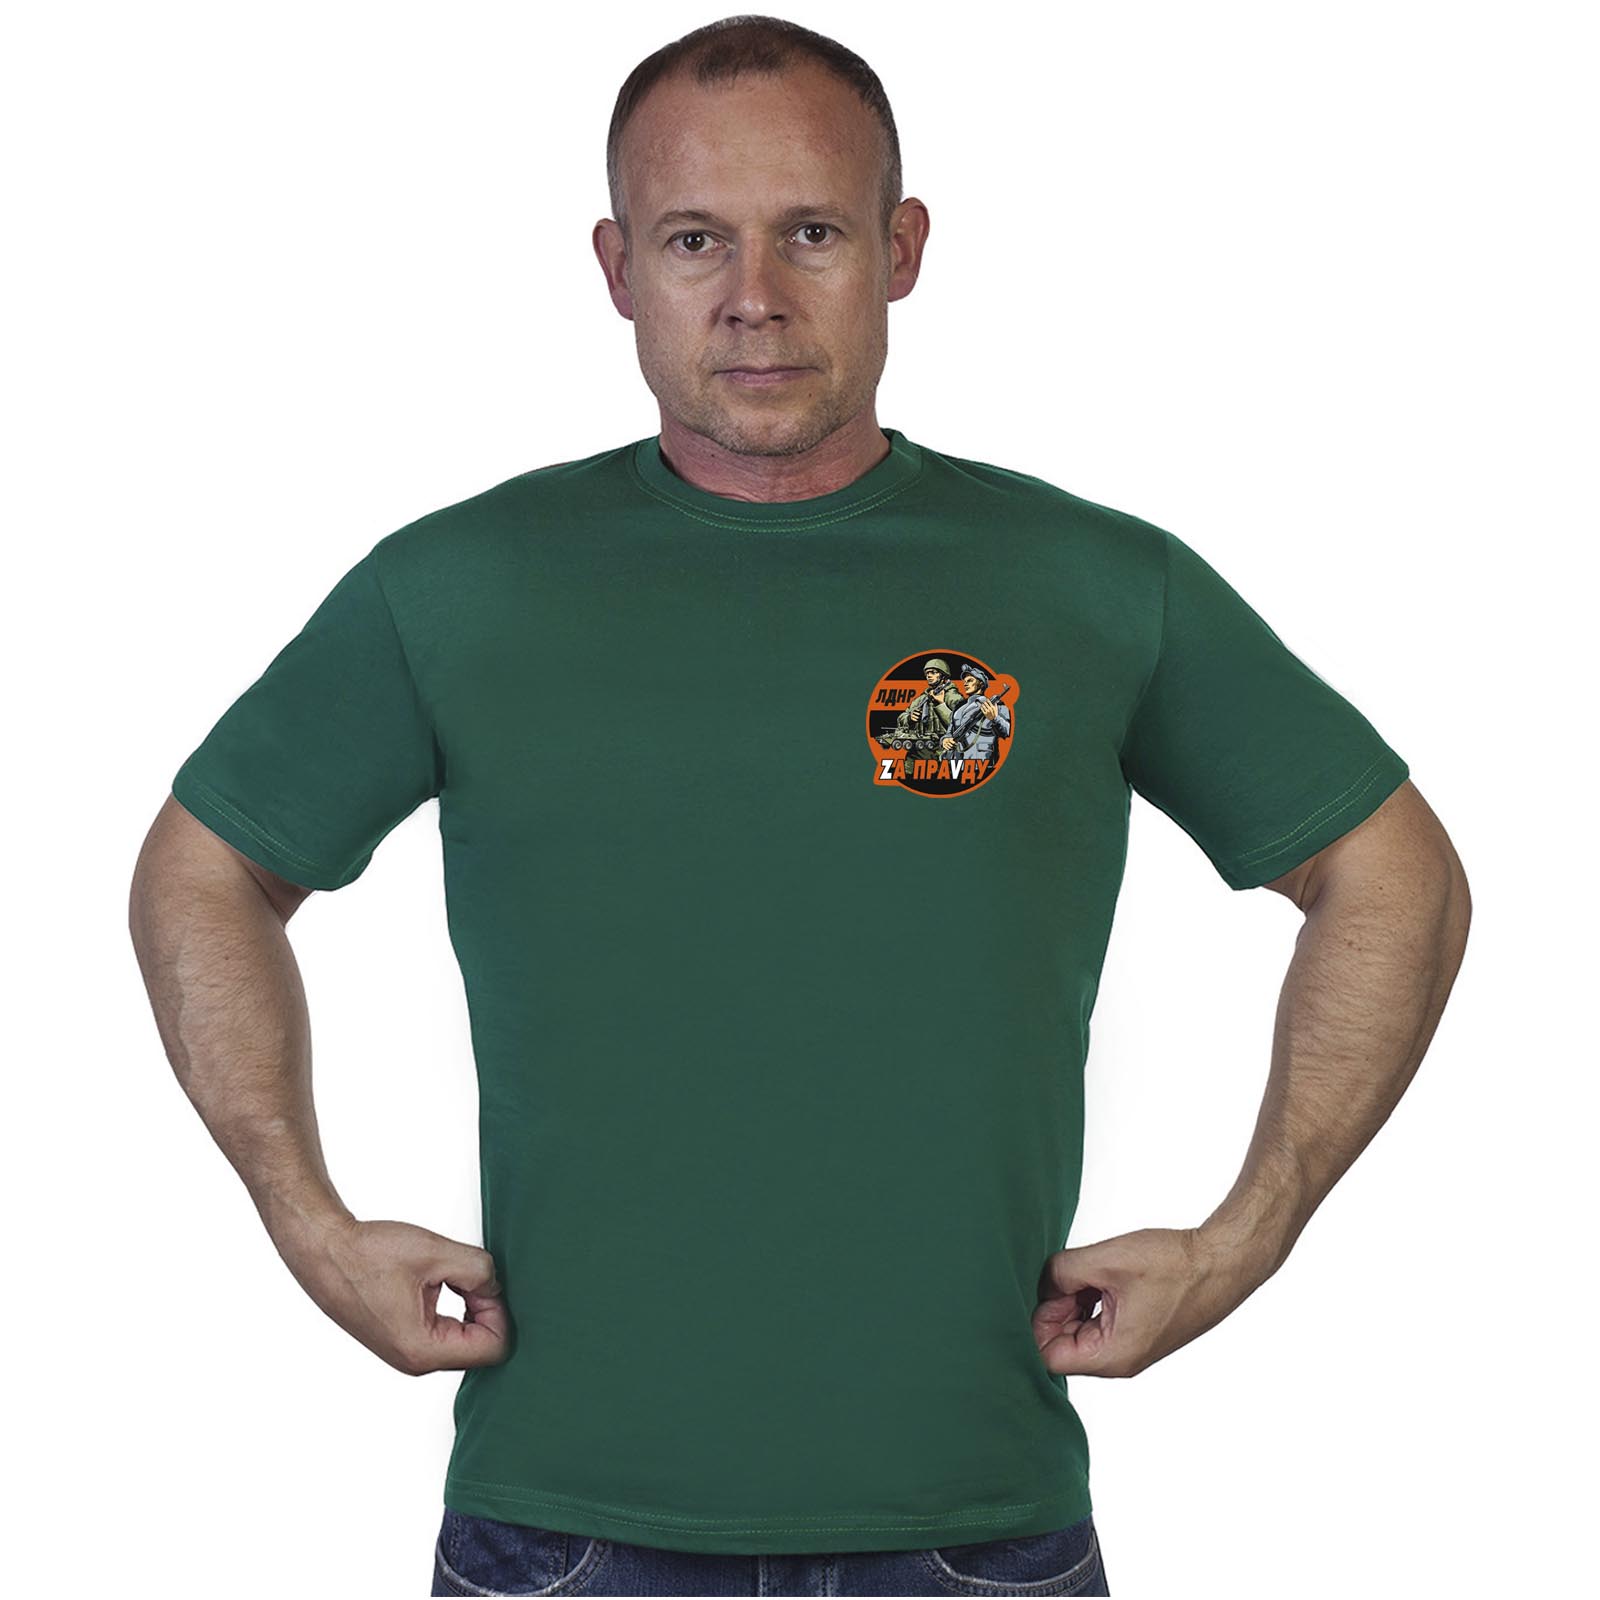 Зелёная футболка с термотрансфером ЛДНР "Zа праVду"